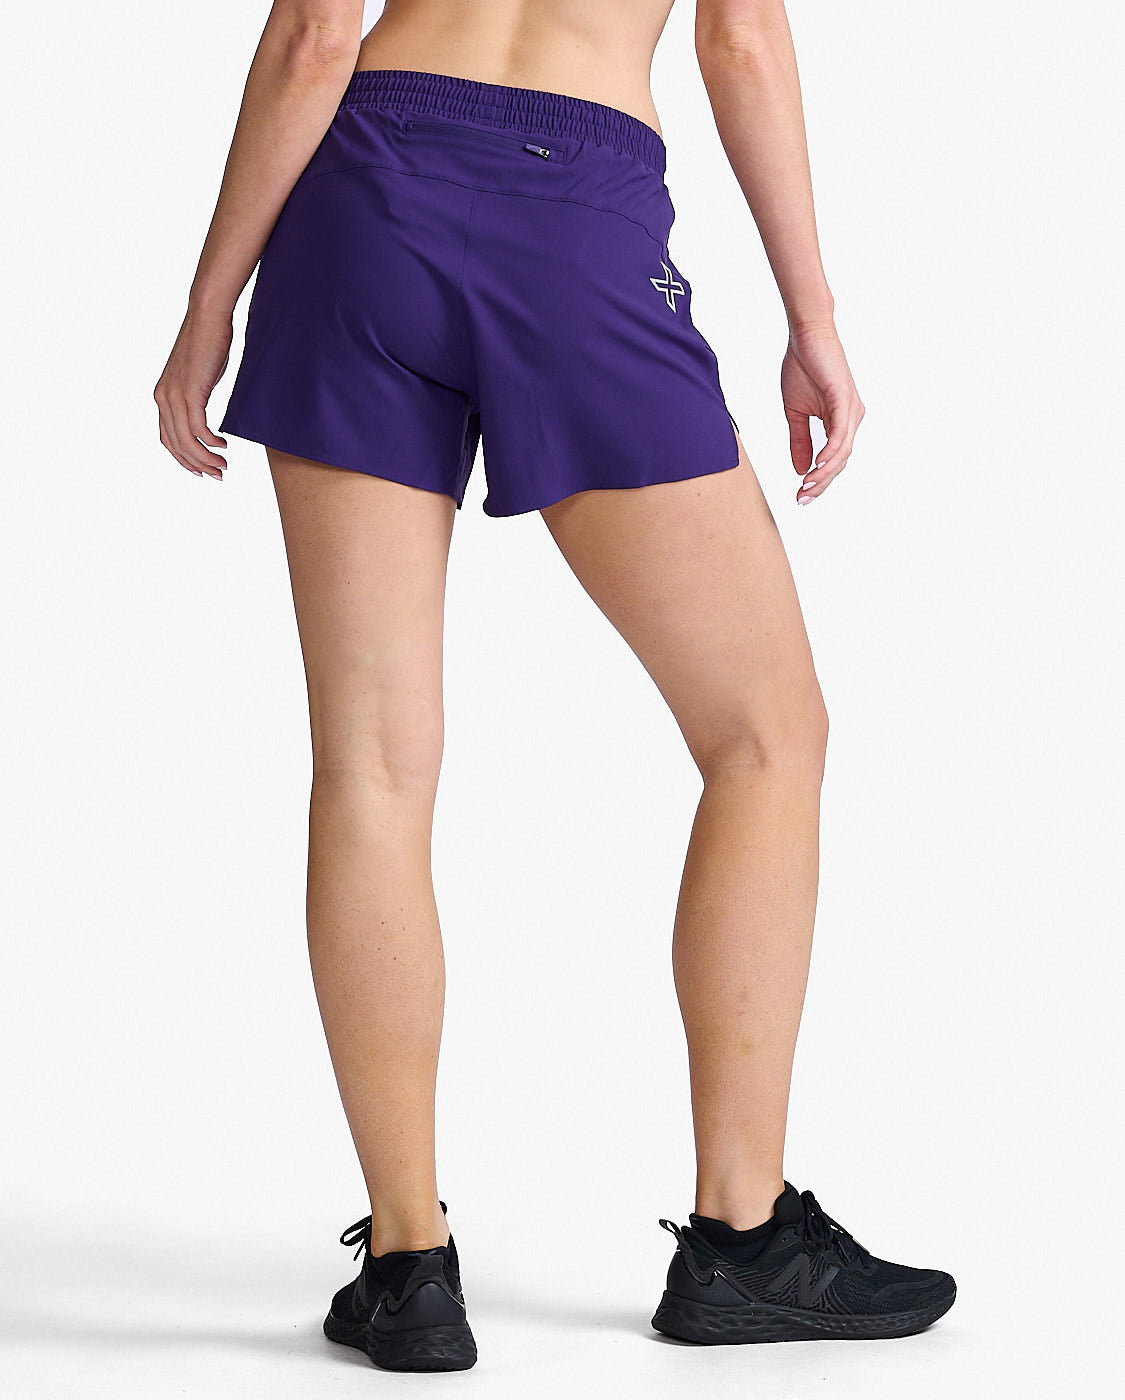 Aero 5 inch Shorts - Shorts